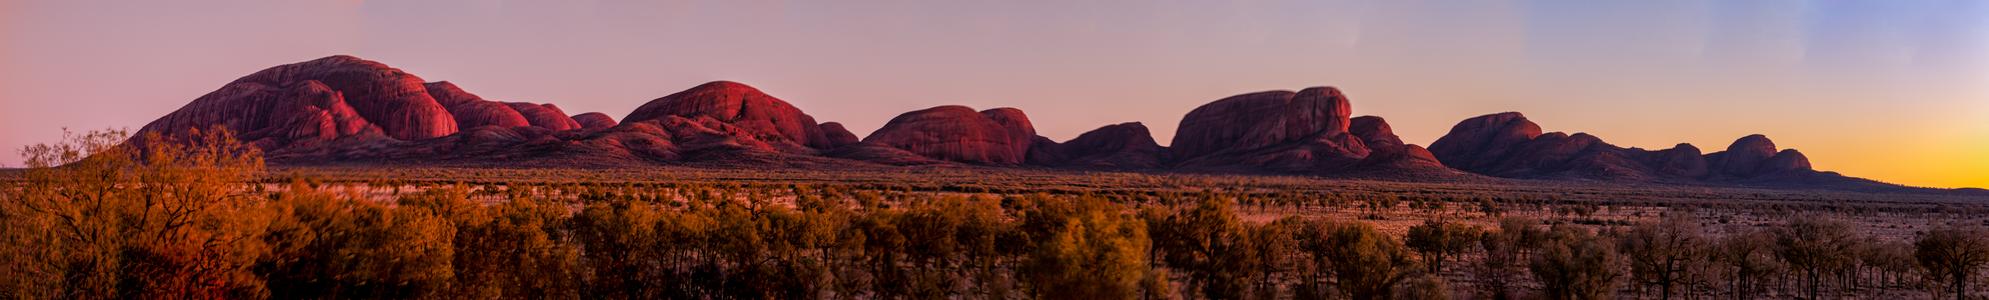 Kata Tjuta The Olgas pano sunrise, Northern Territory